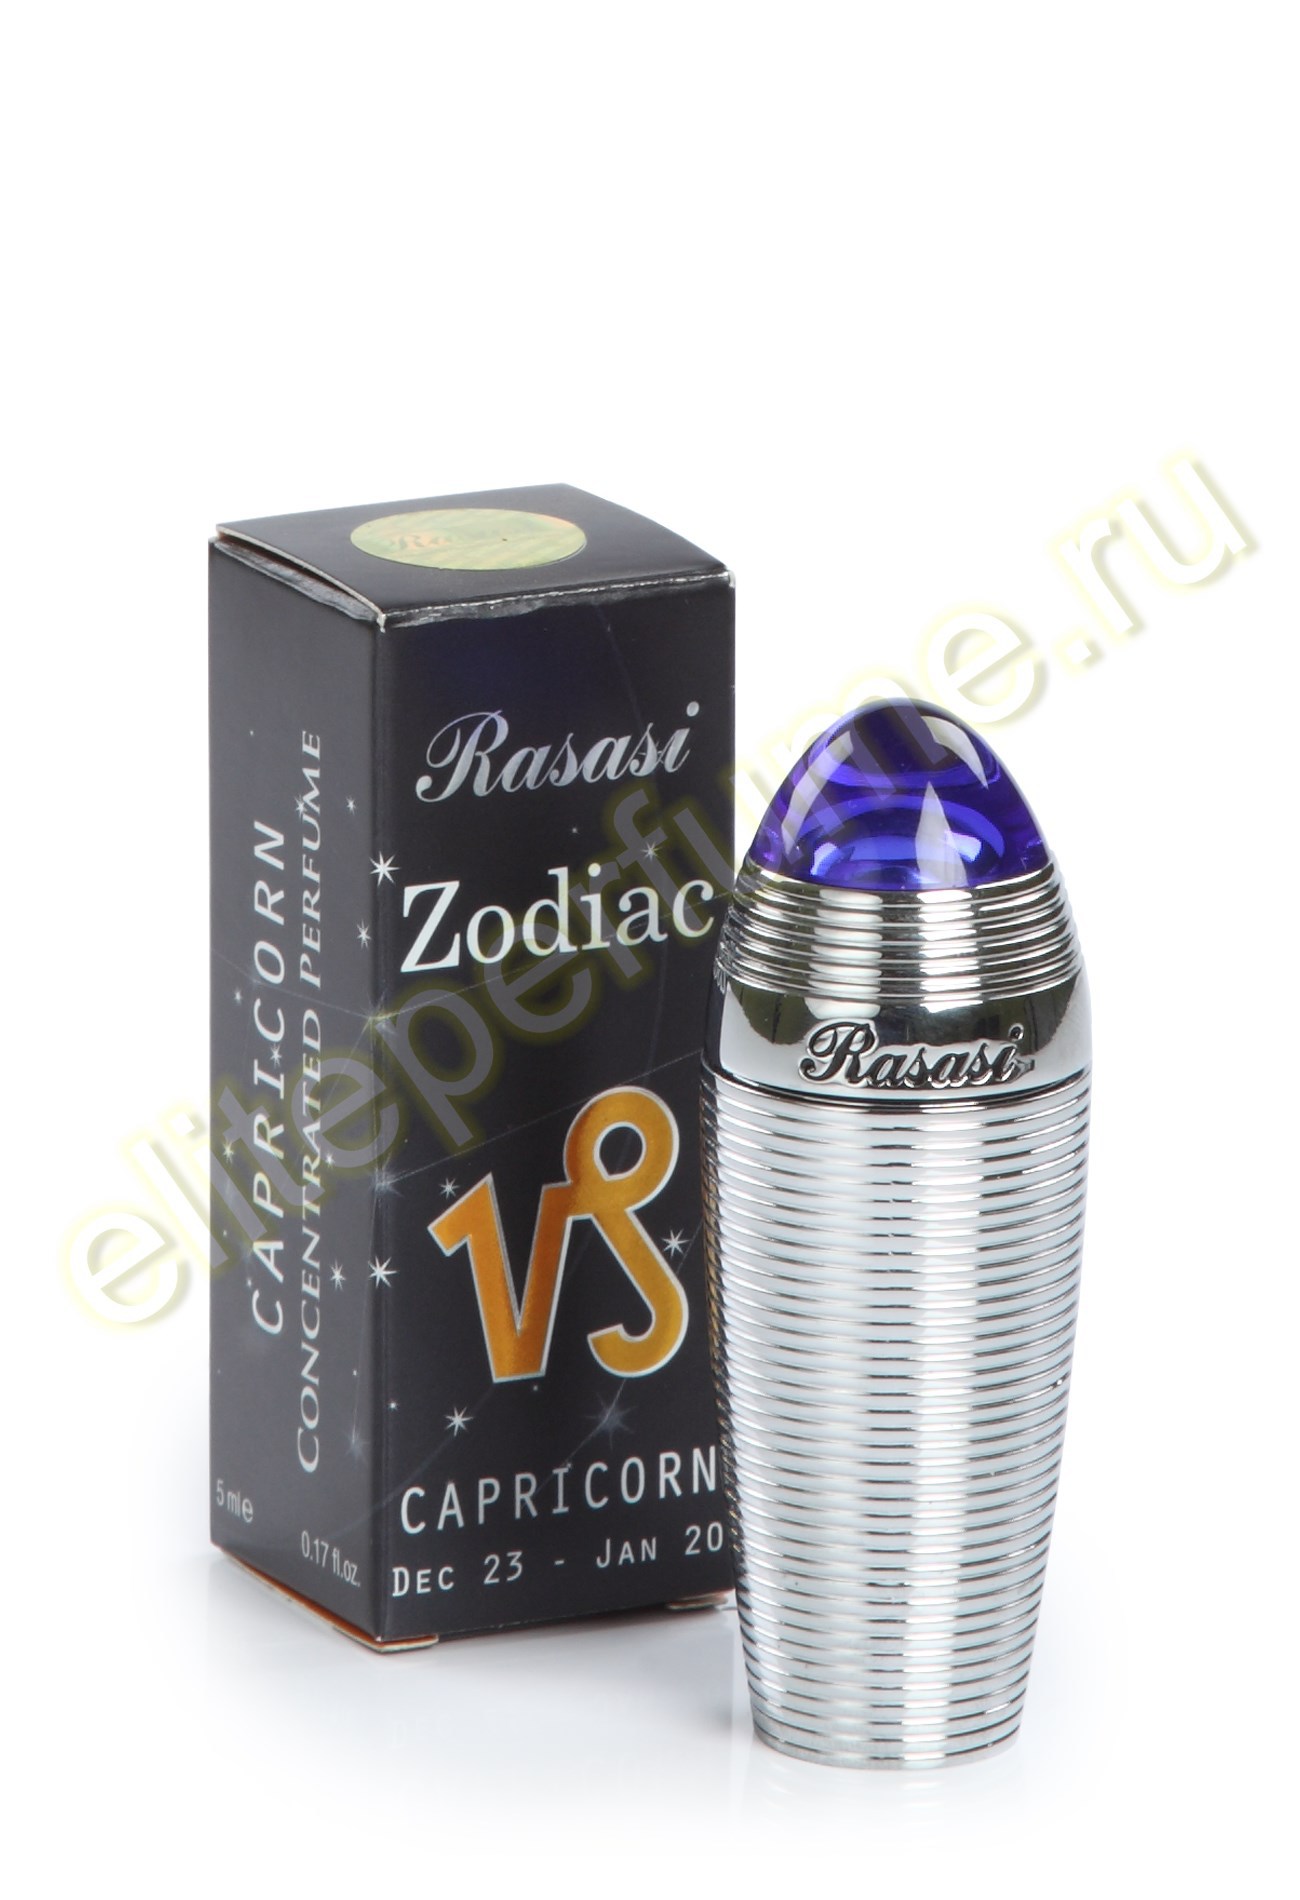 Зодиак Козерог Zodiac Capricorn 5 мл арабские масляные духи от Расаси Rasasi Perfumes